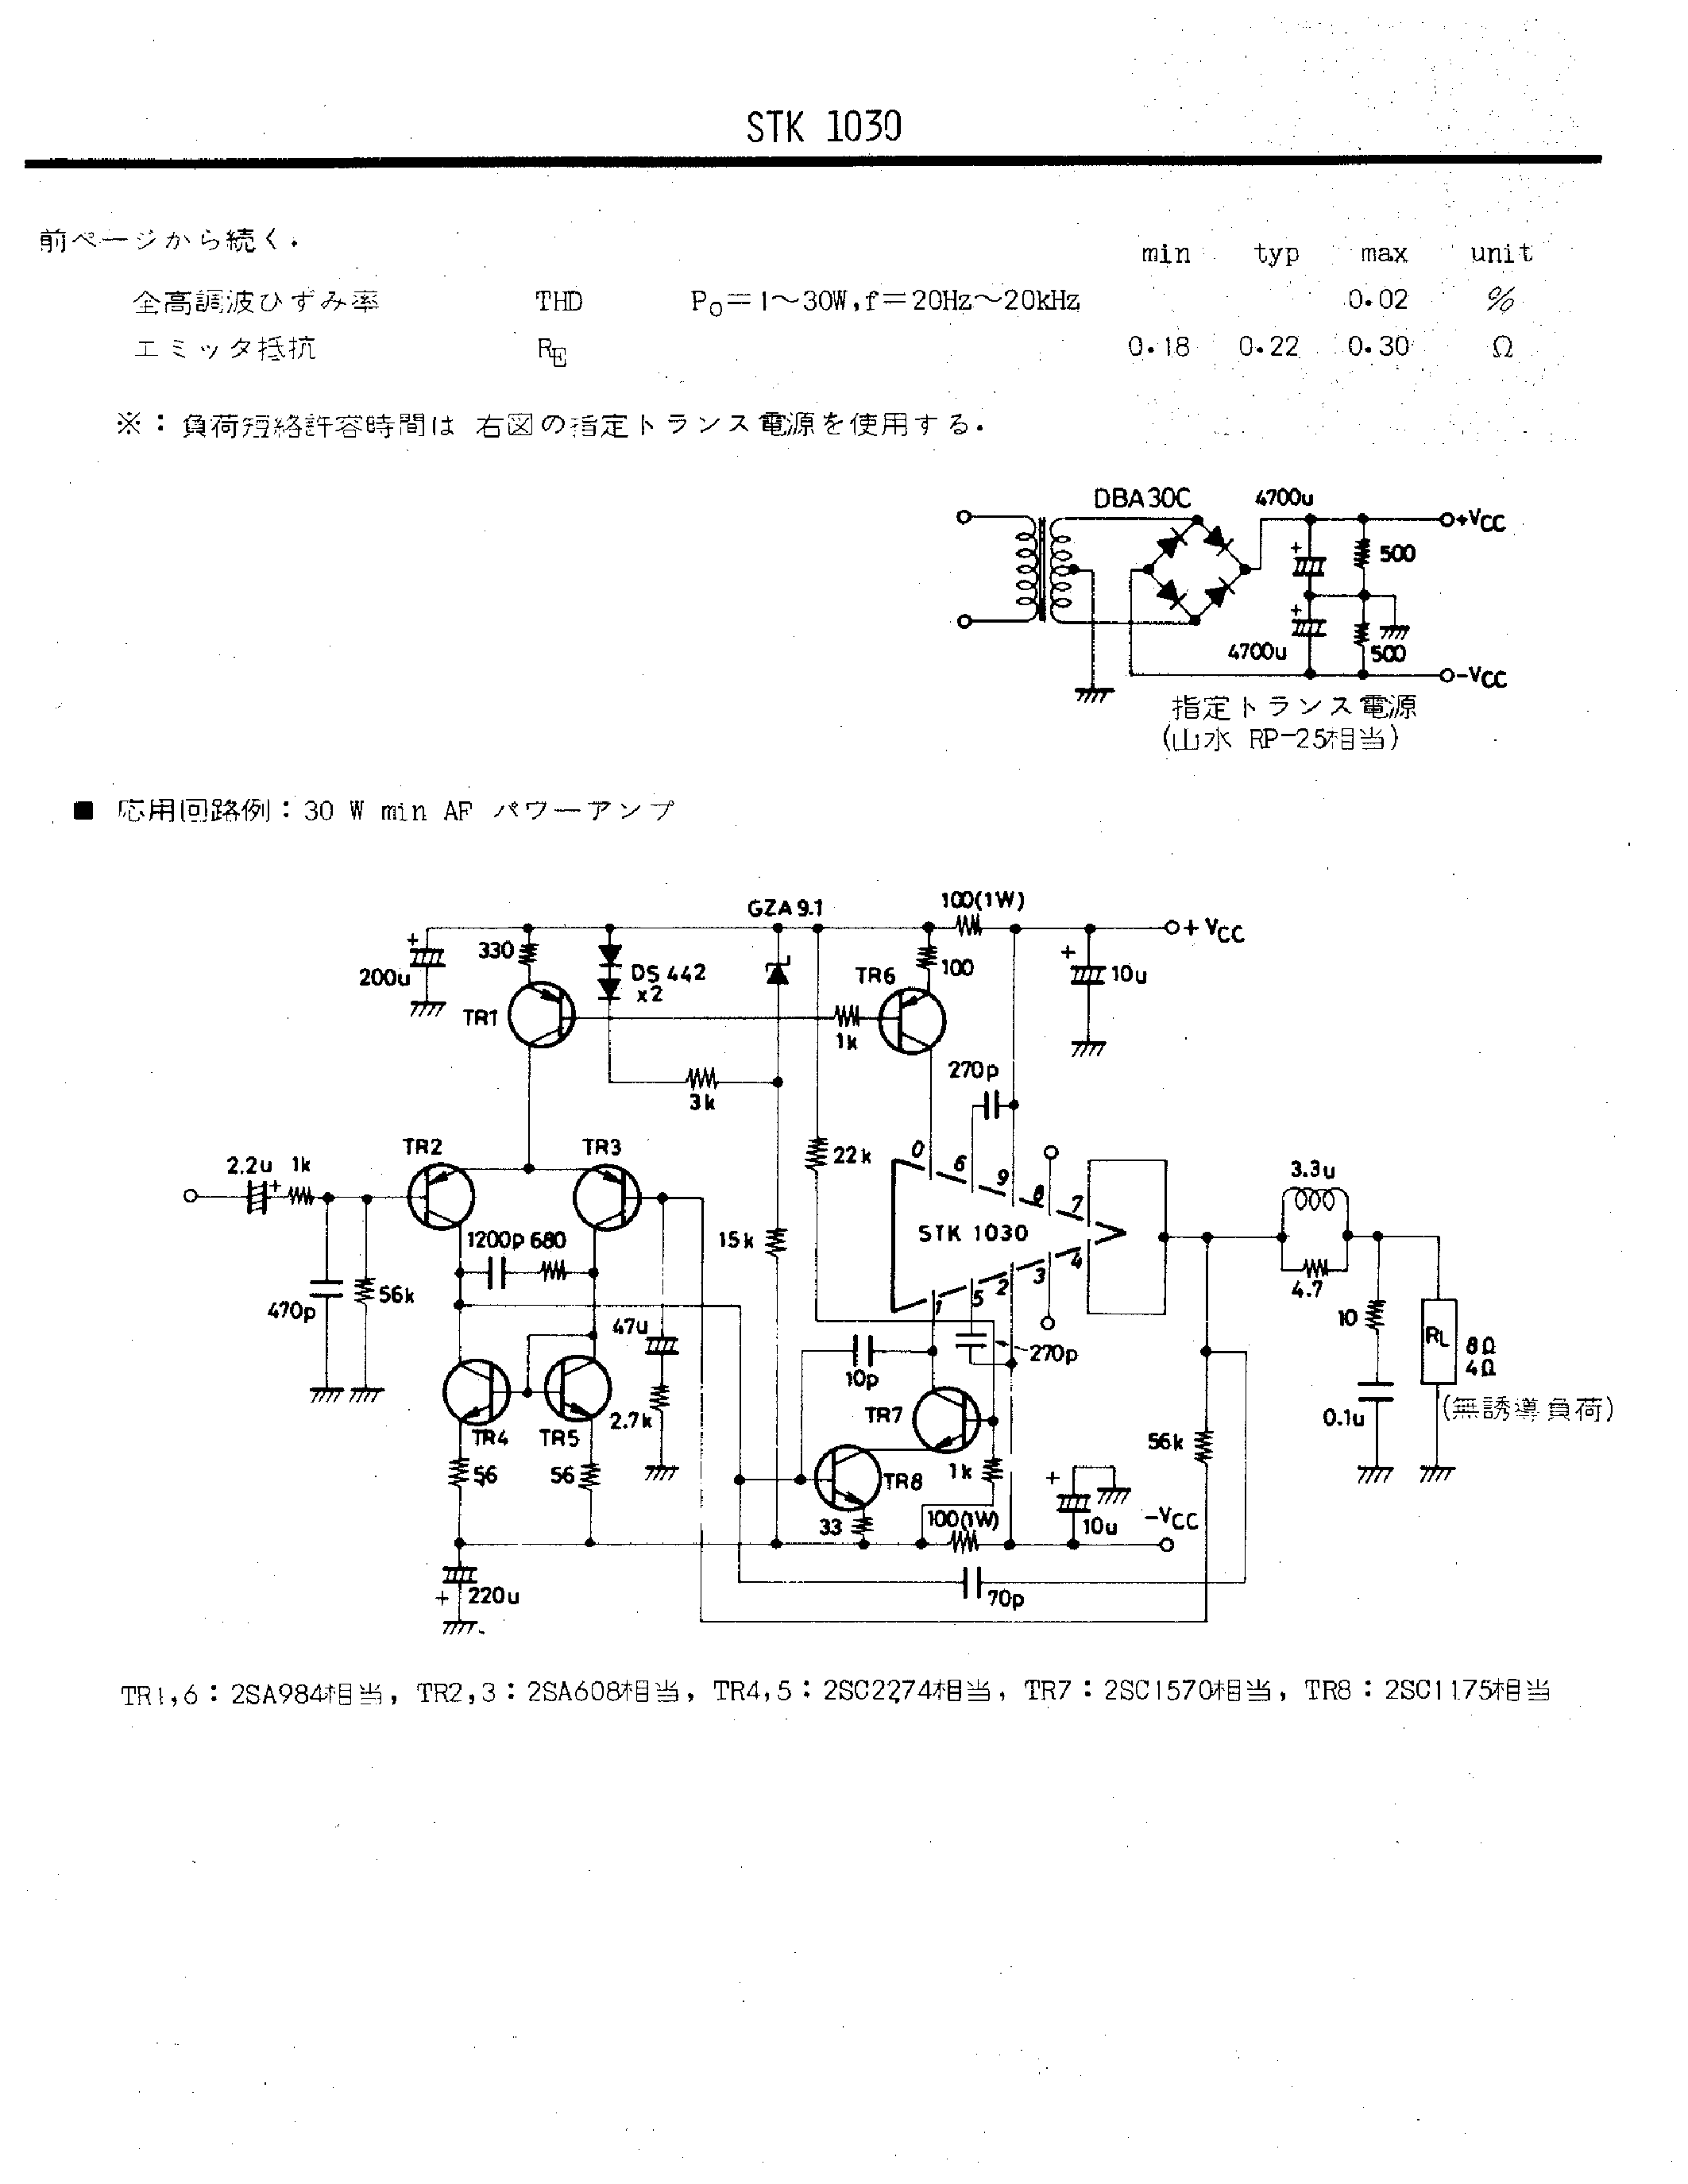 Даташит STK1030 - AF Power Amplifier Output Stage страница 2